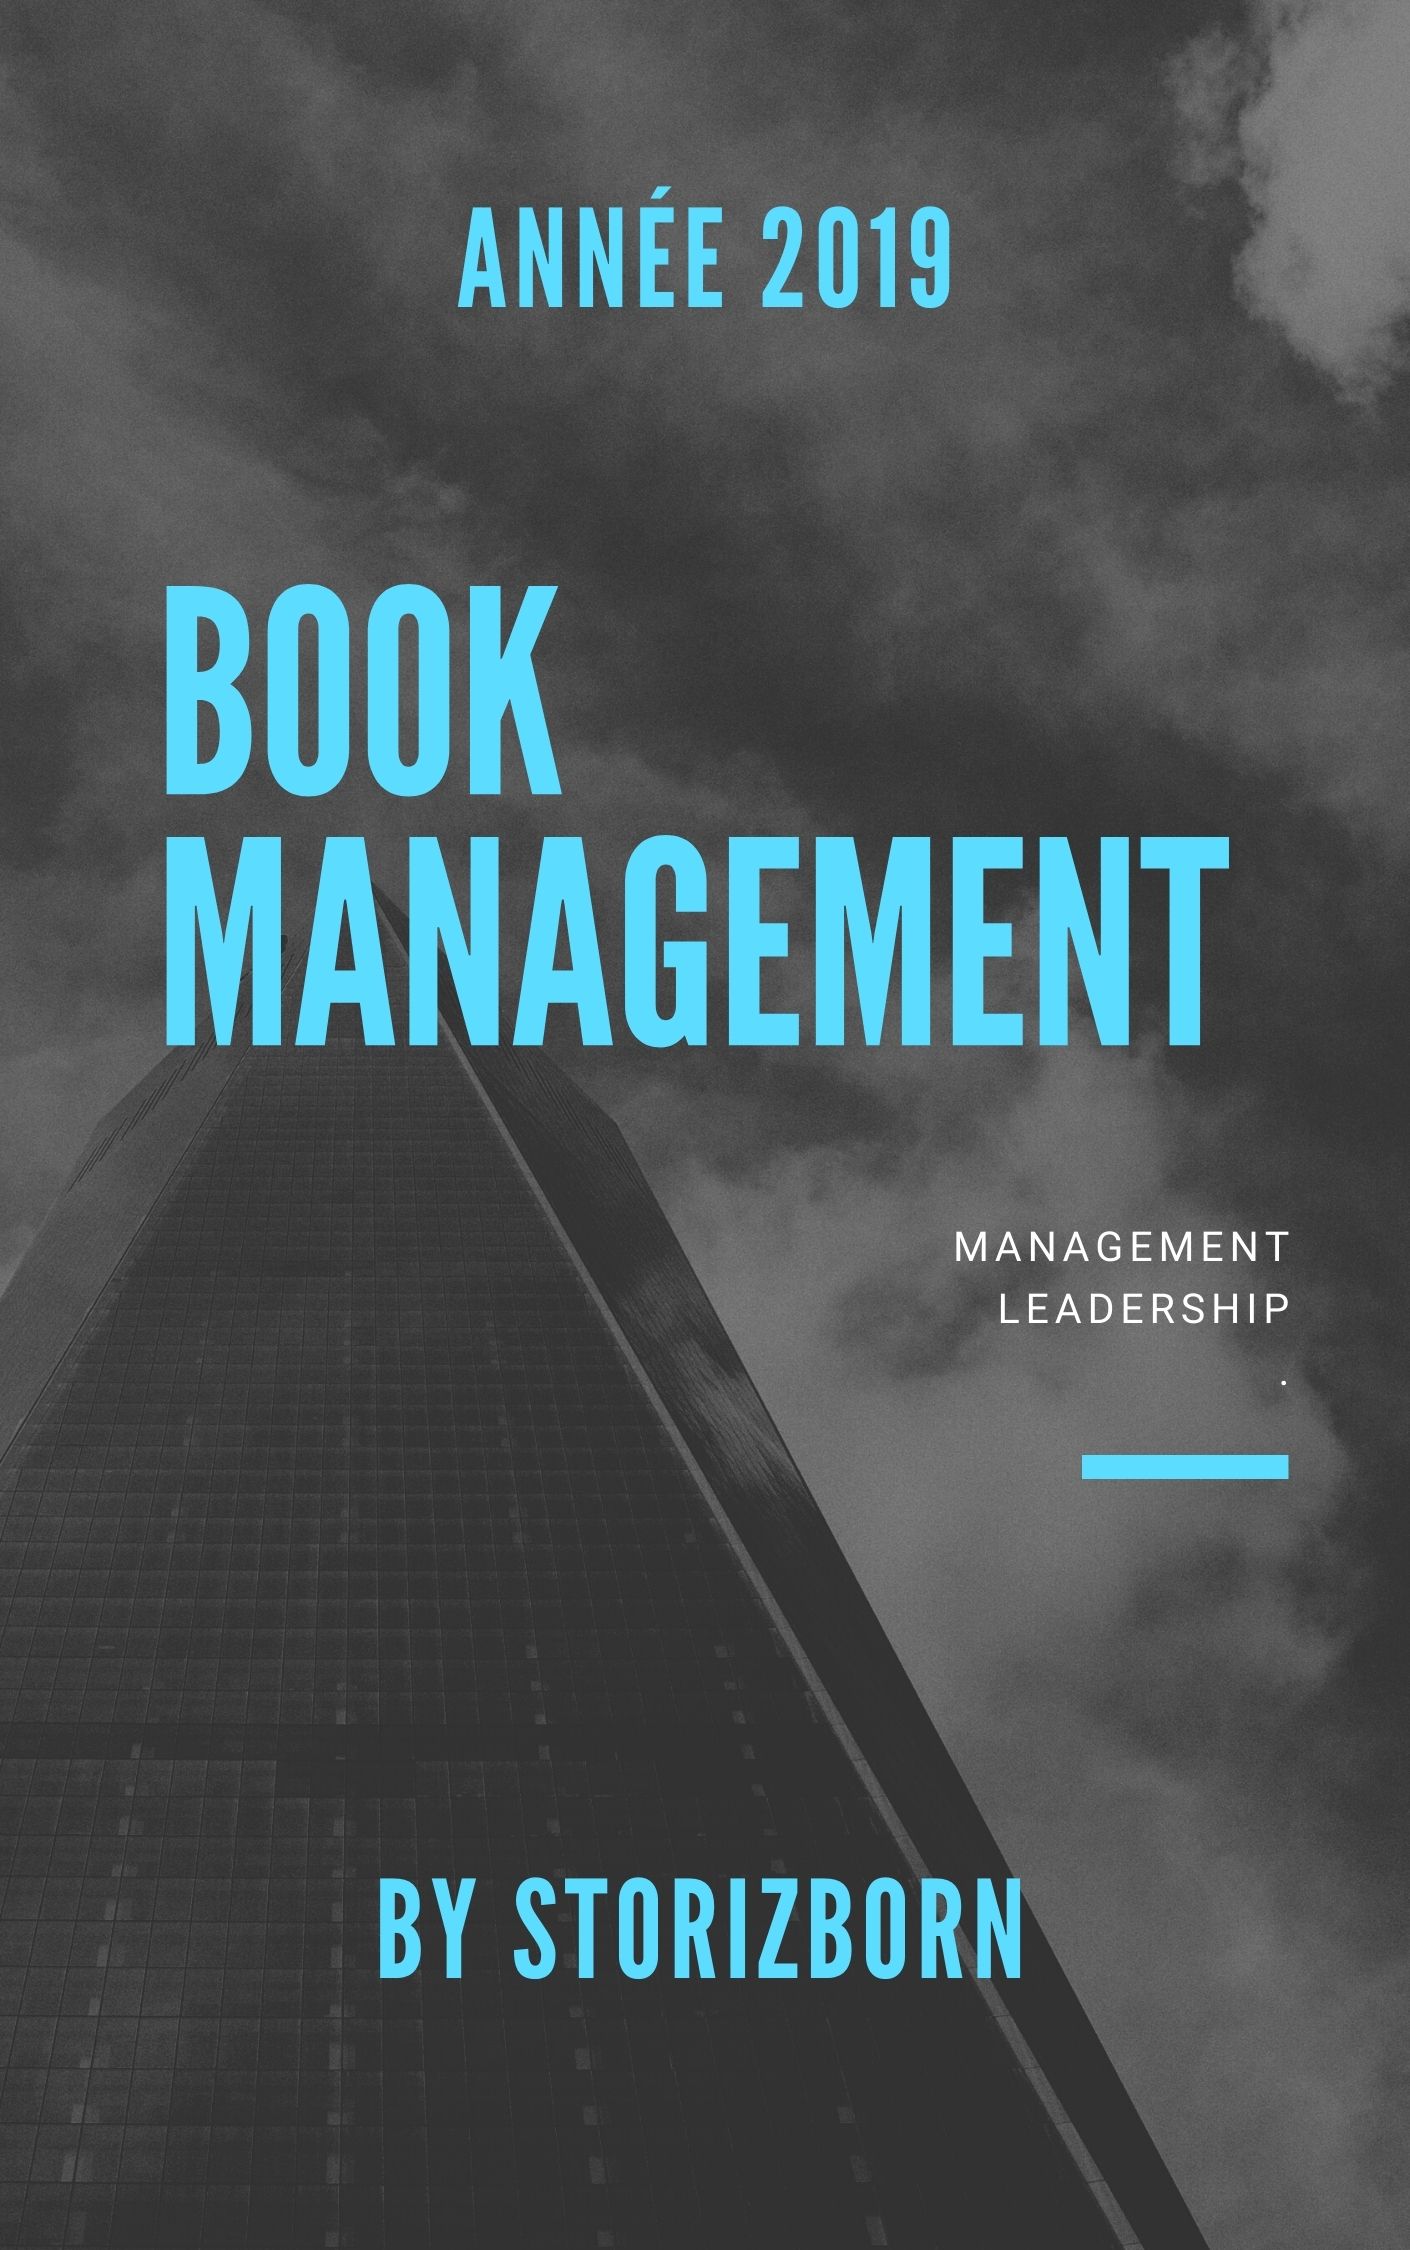 Book management 2019